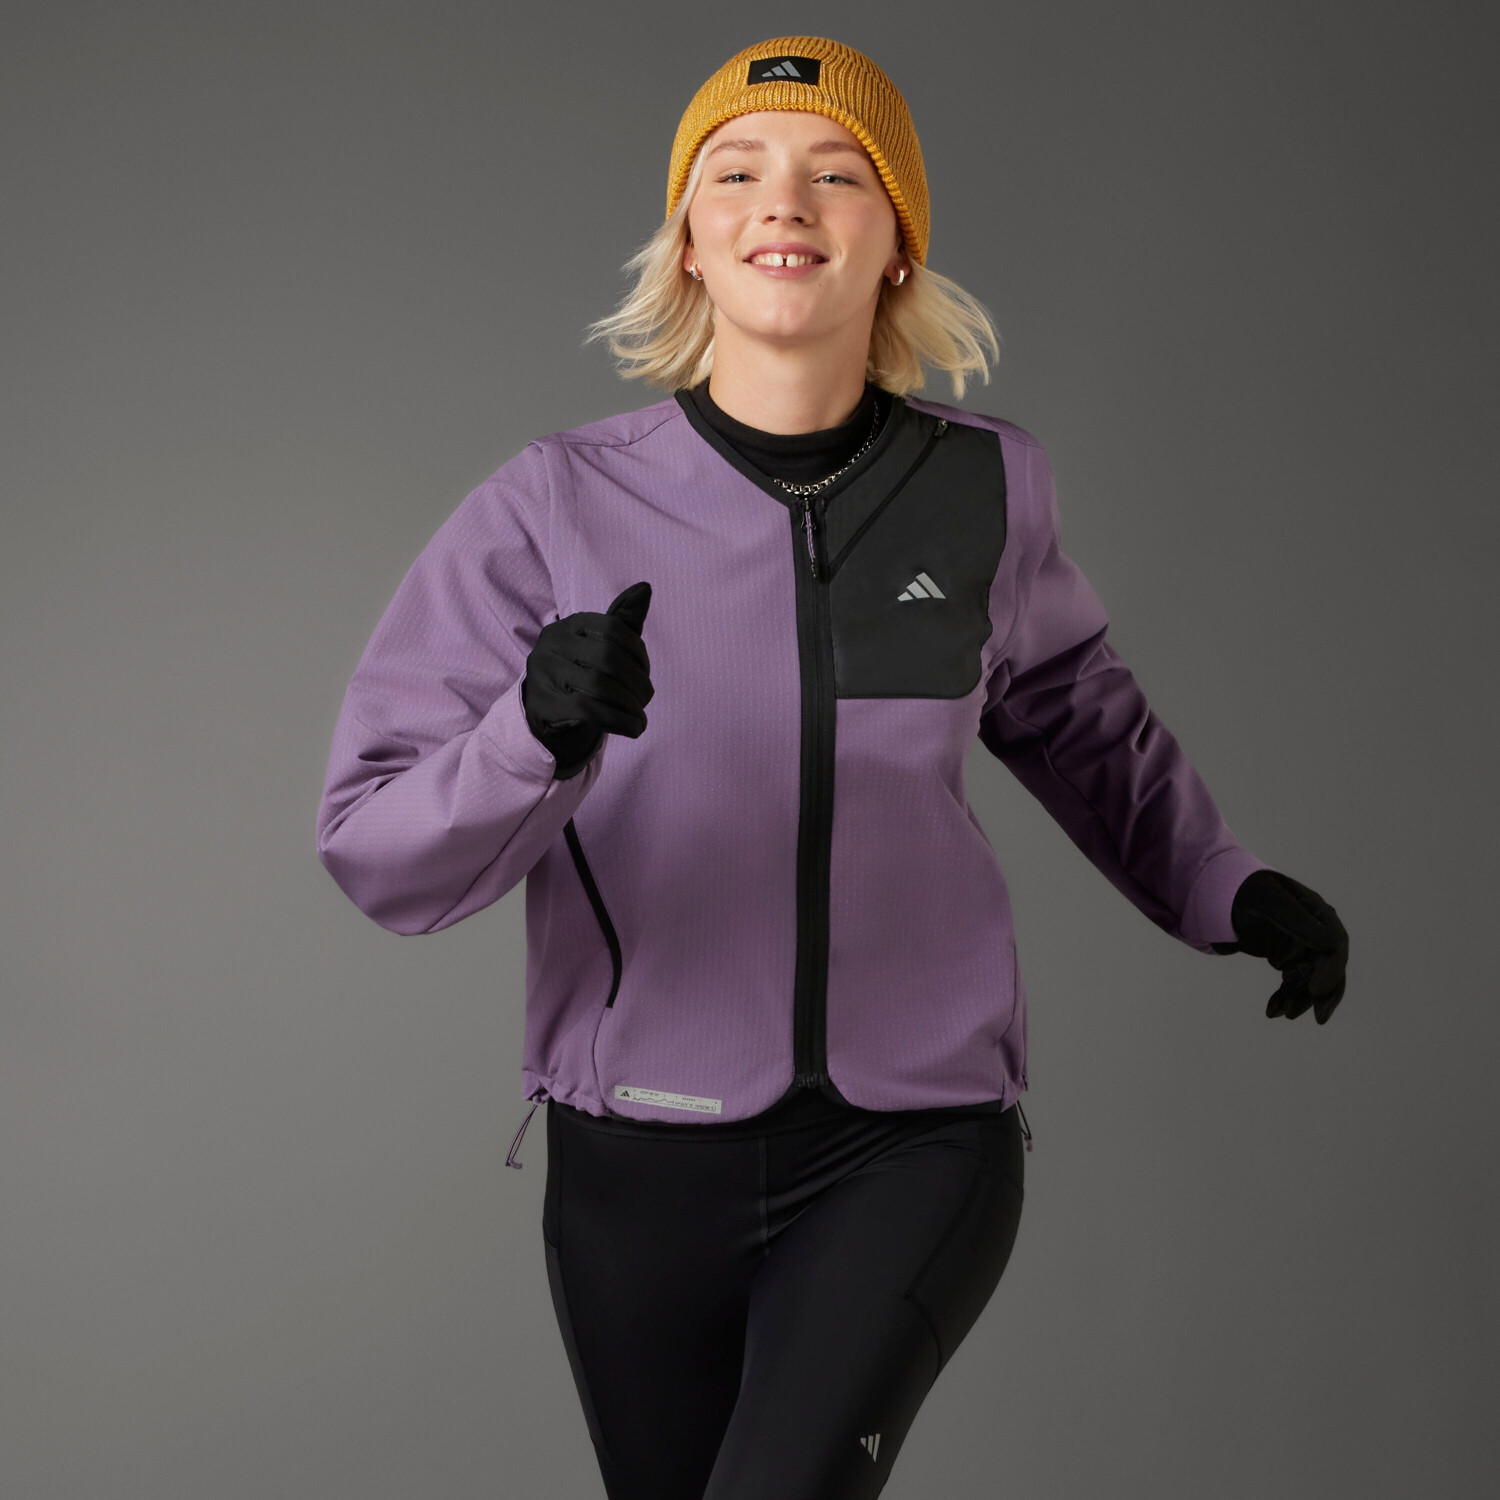 Dynafit Alpine Reflective Damen Laufjacke - Jacken - Laufbekleidung -  Running - Alle